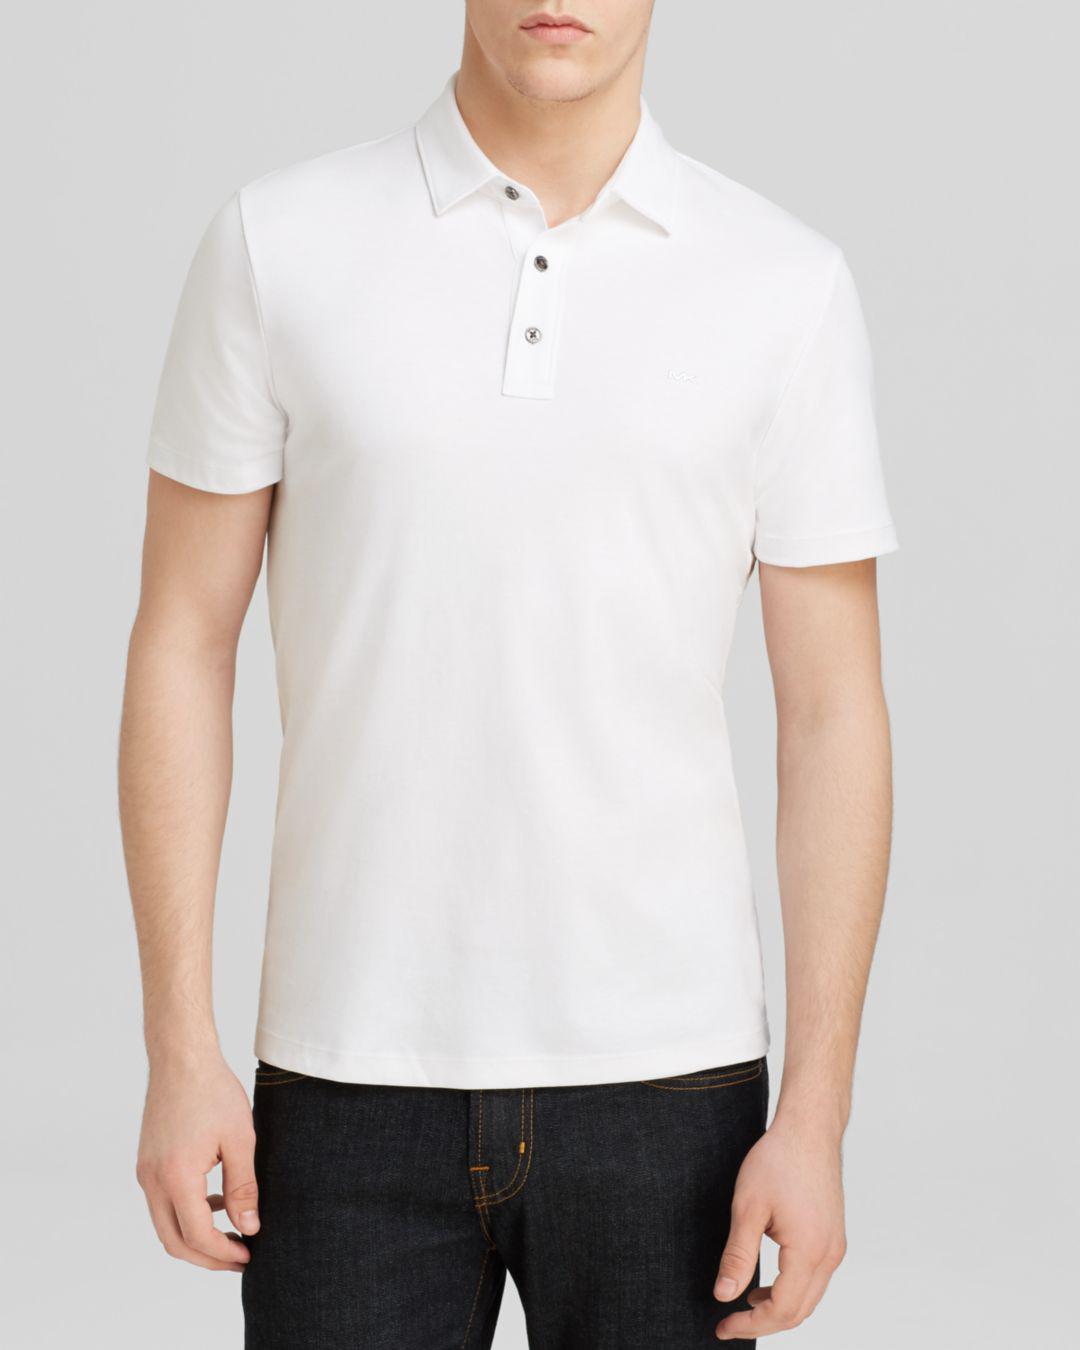 Michael Kors Cotton Sleek Slim Fit Polo Shirt in White for Men - Lyst